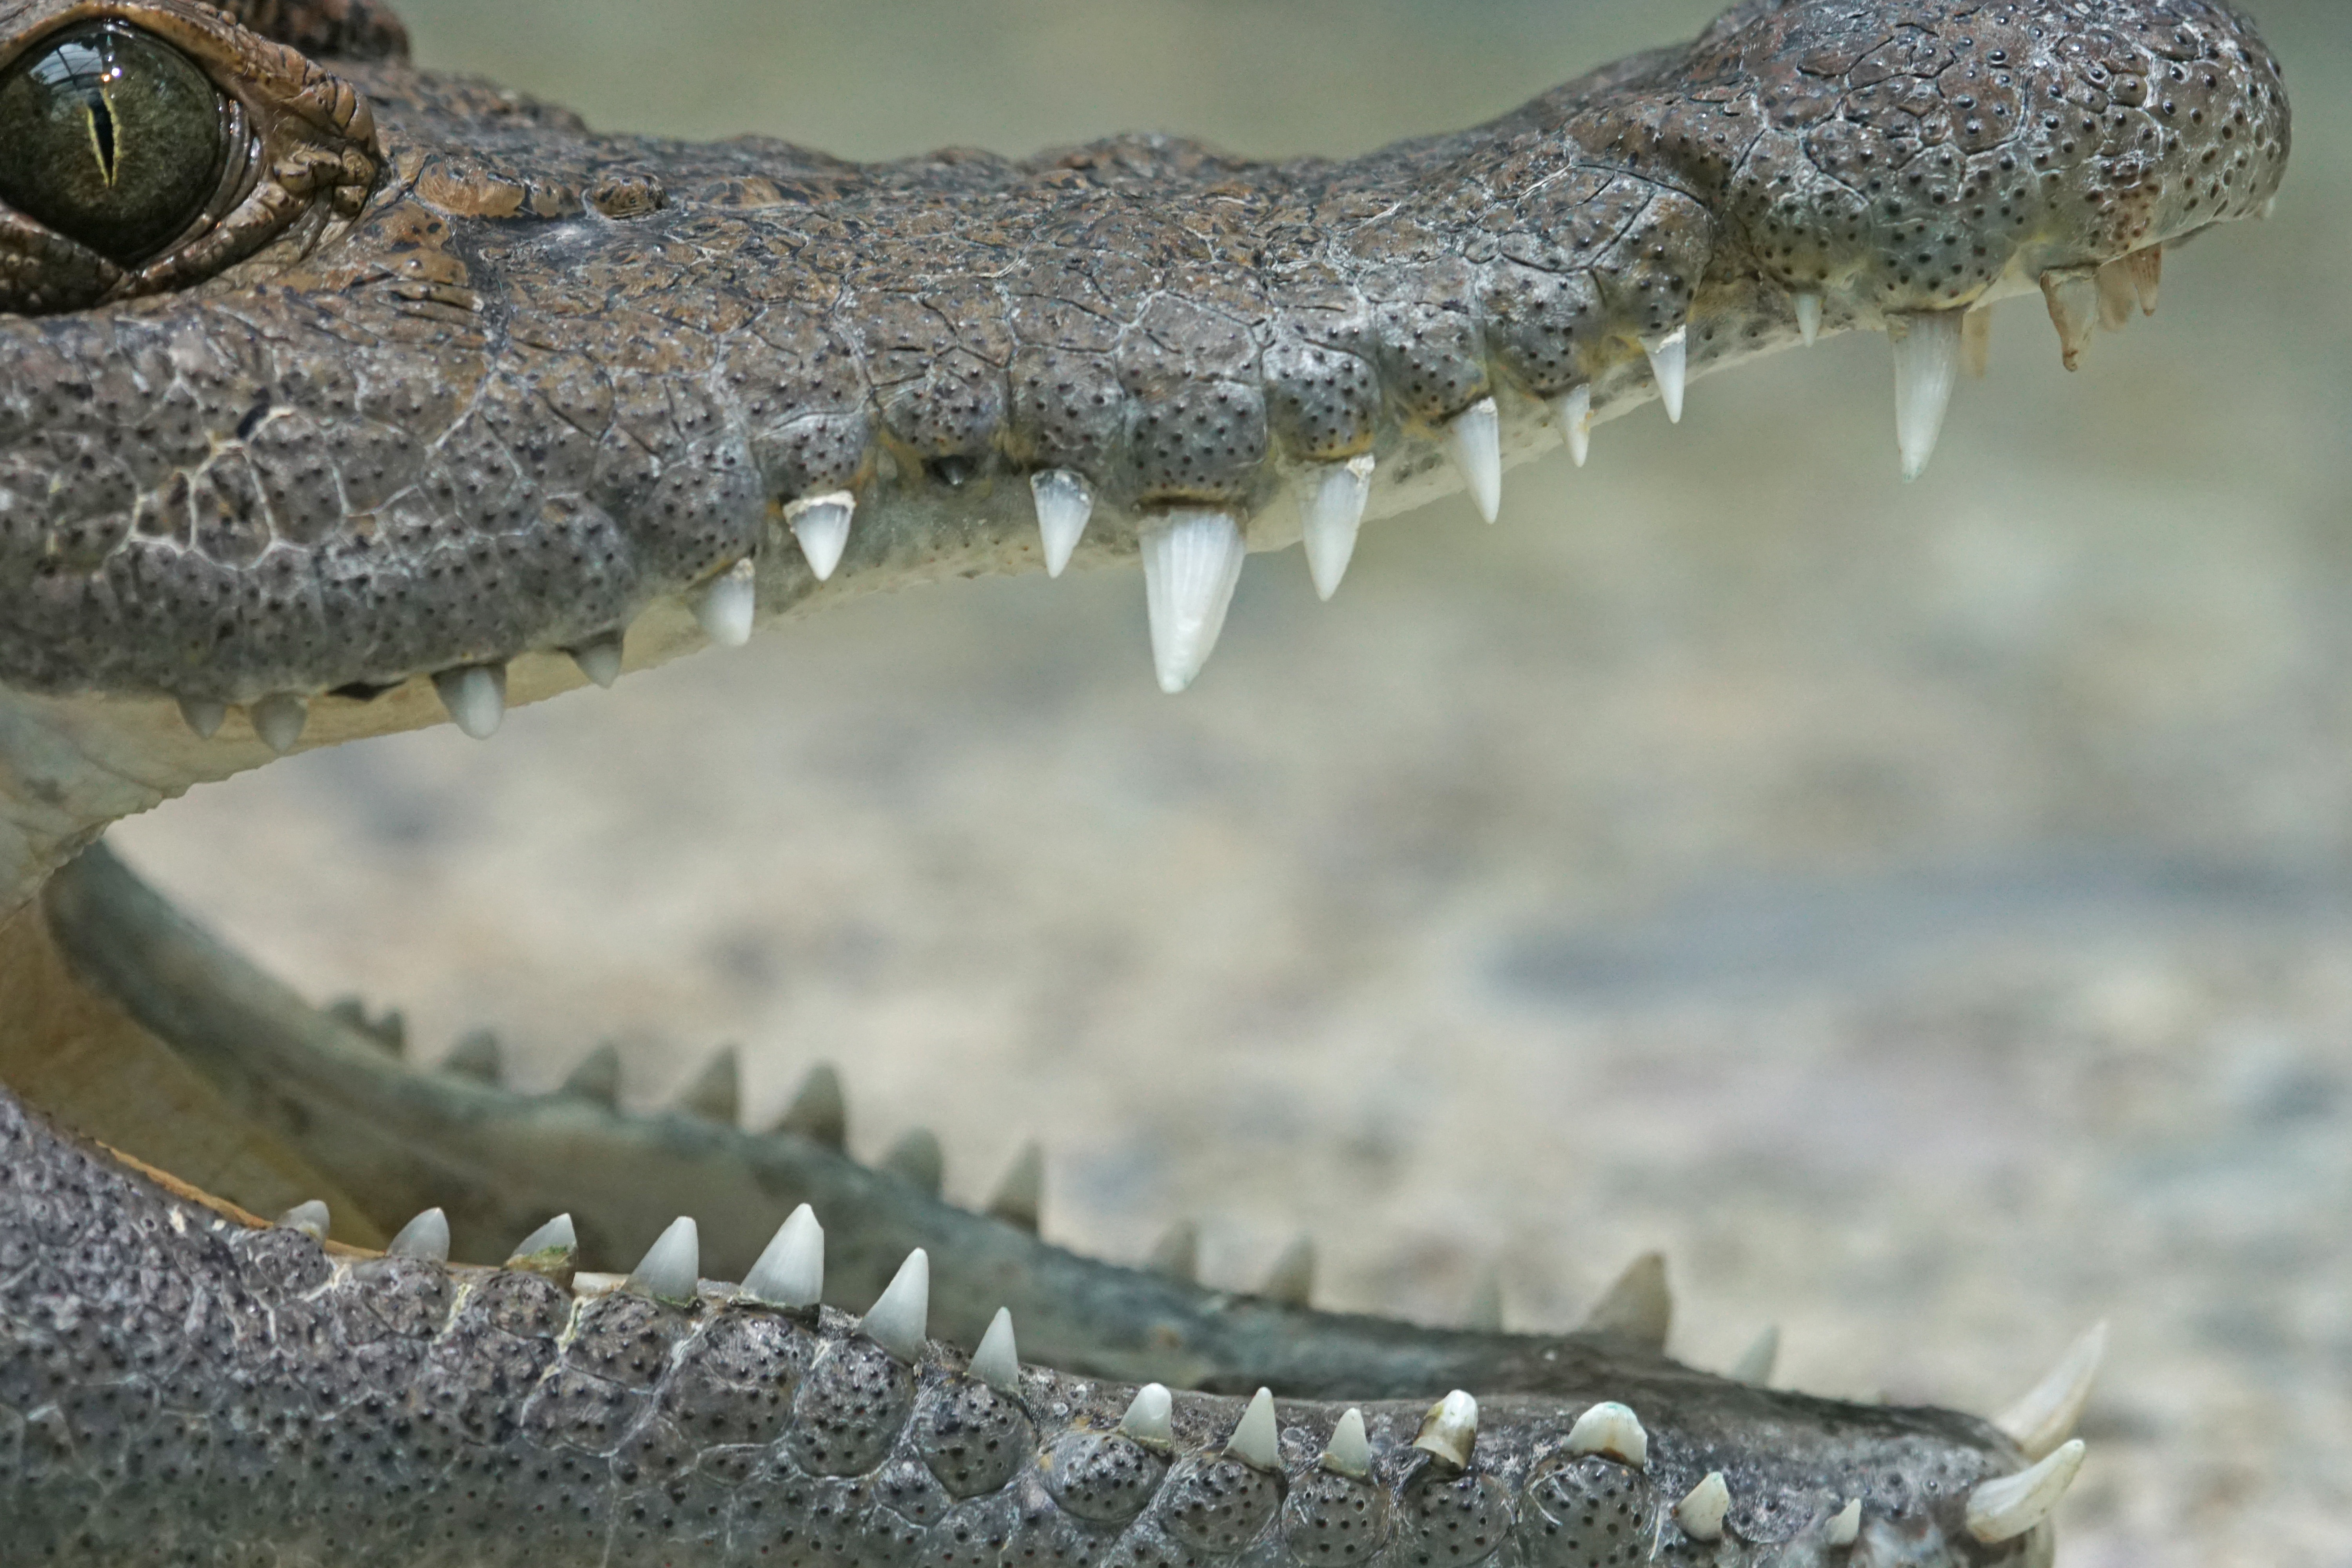 alligator's mouth